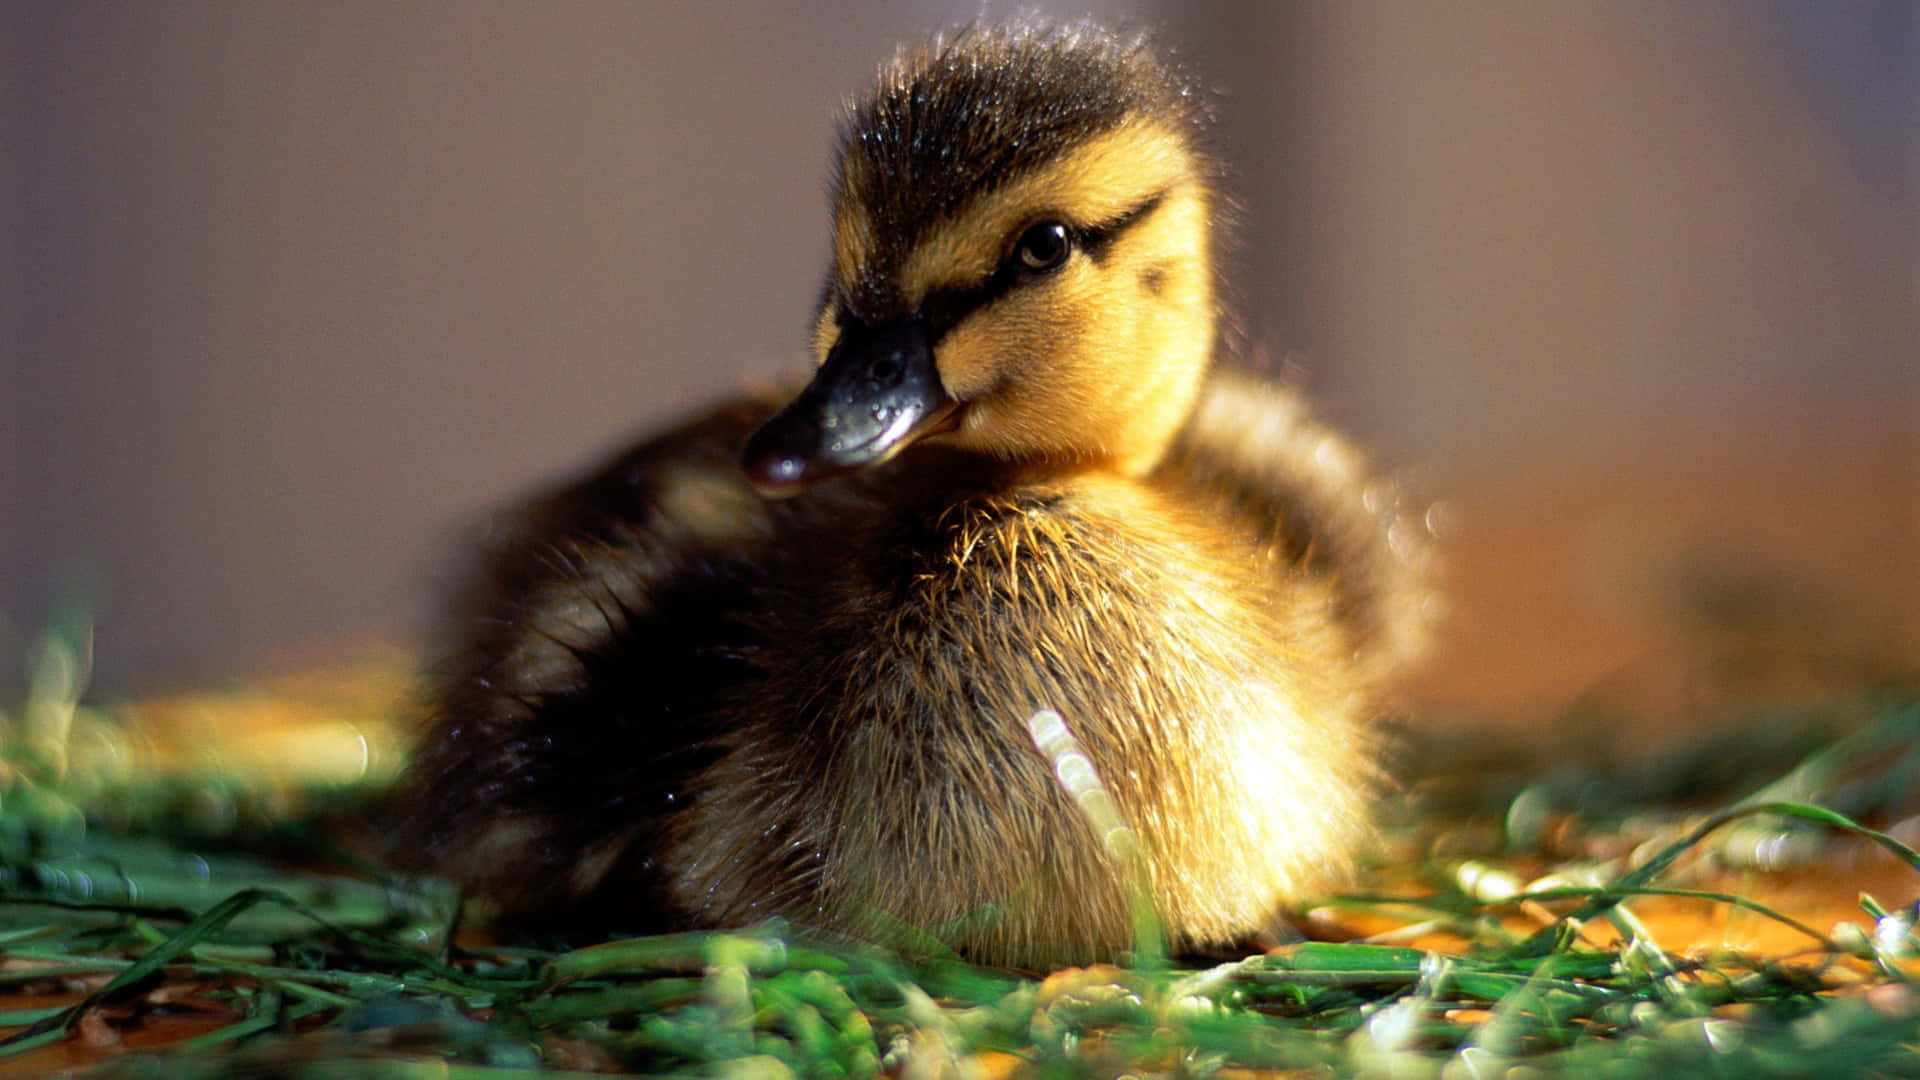 Adorable little baby duck